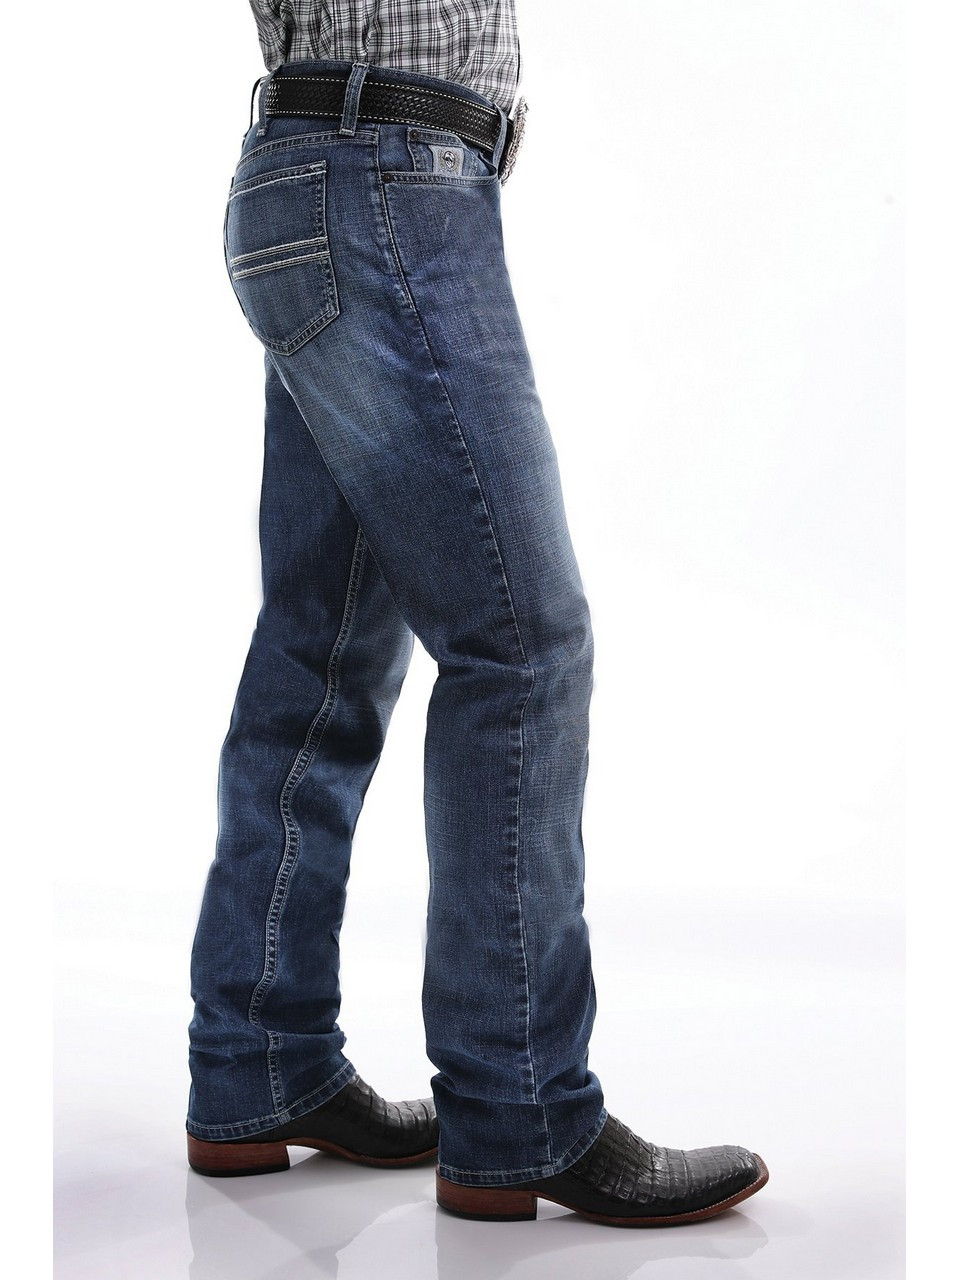 cinch stretch jeans